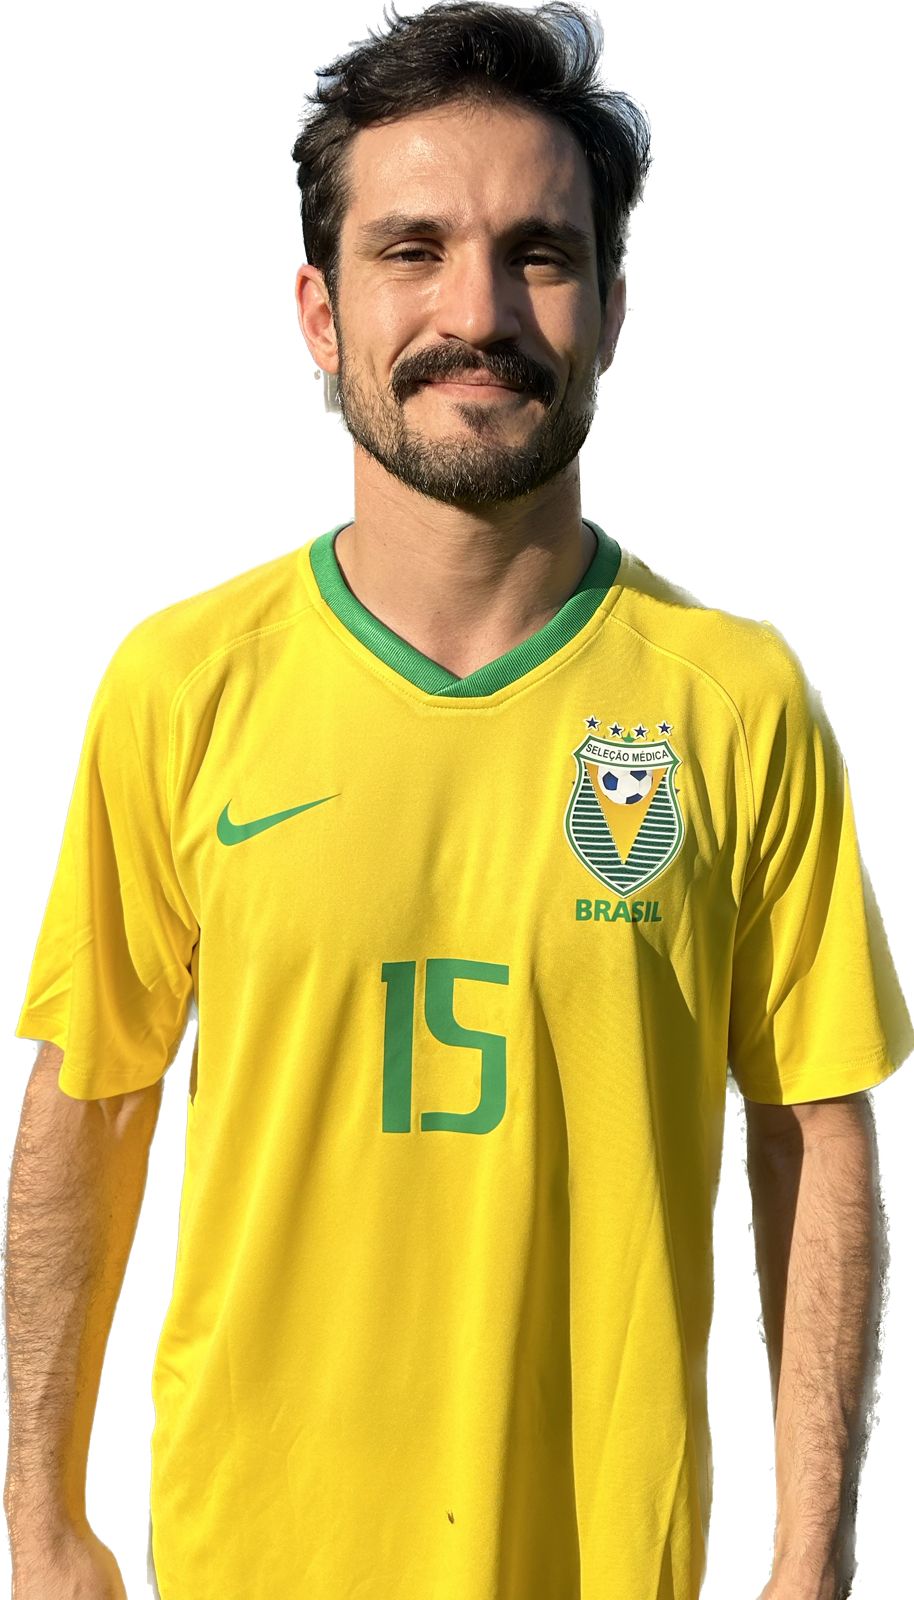 Felipe Carvalho